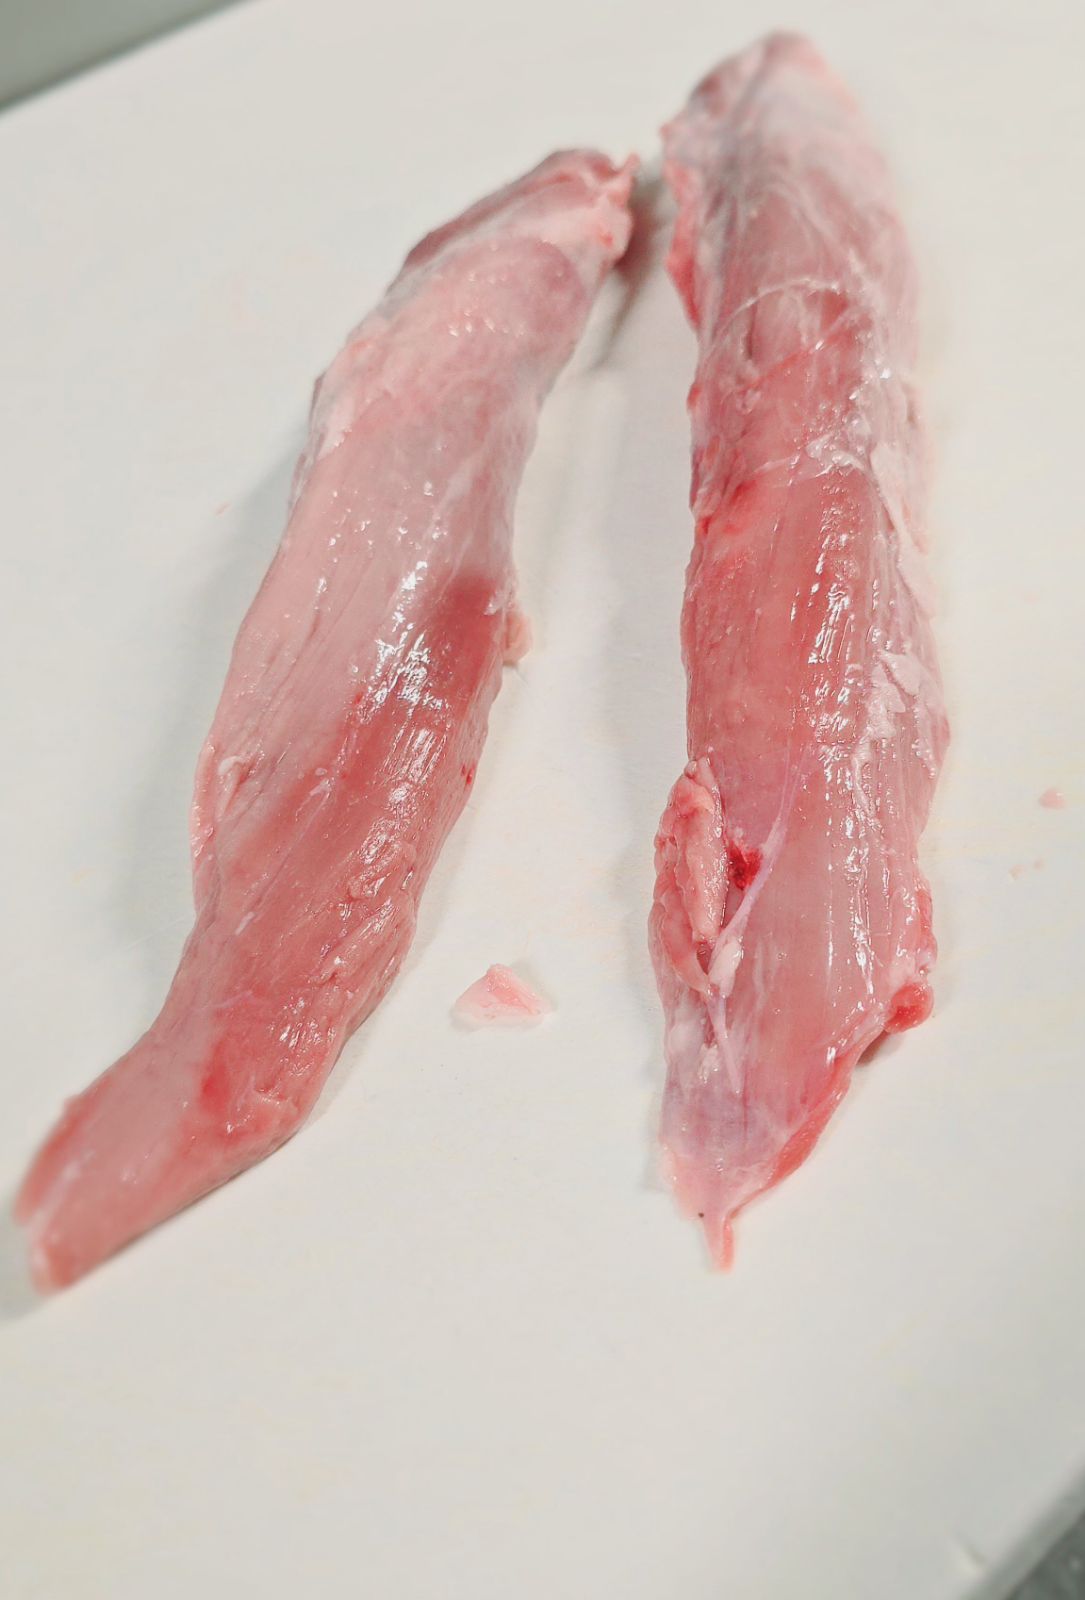 Pastured Pork Tenderloin, Whole Boneless